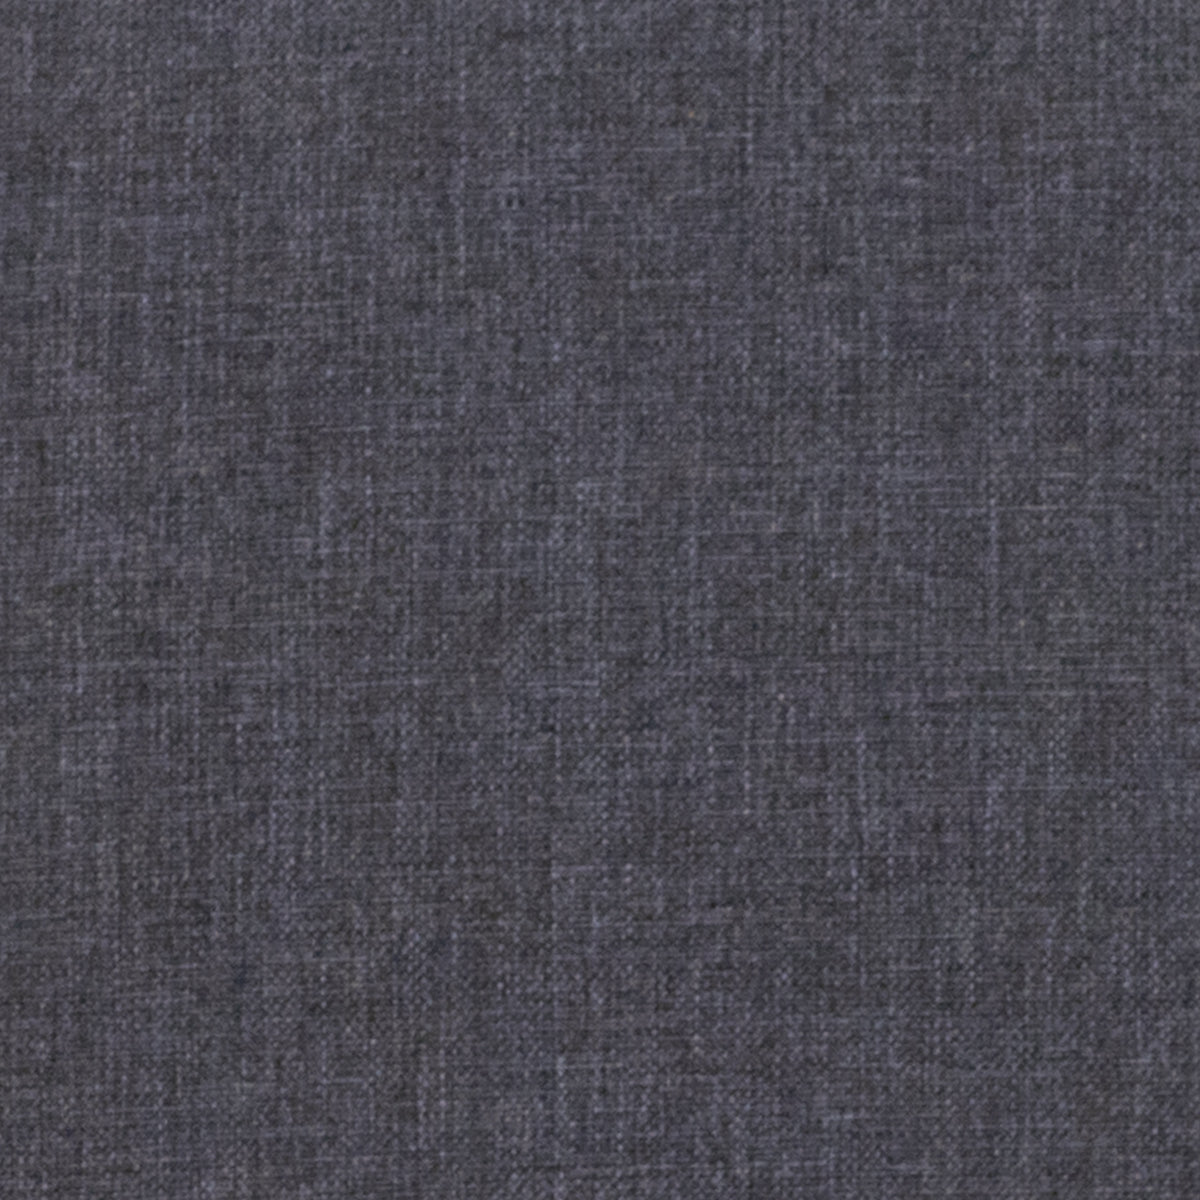 Dark Gray Fabric/Silver Vein Frame |#| 18.5inchW Stacking Church Chair in Dark Gray Fabric - Silver Vein Frame